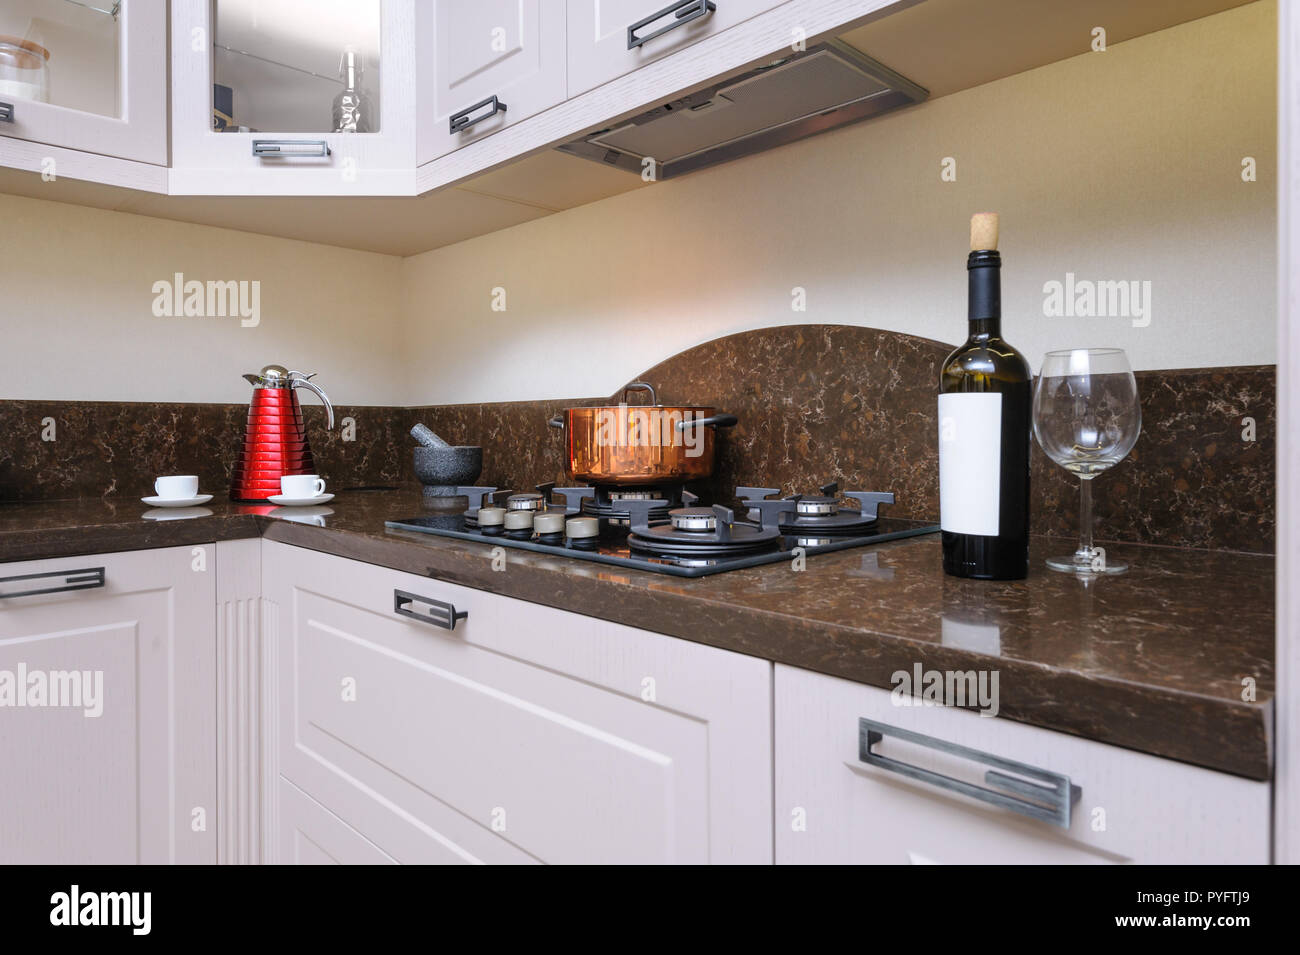 https://c8.alamy.com/comp/PYFTJ9/luxury-modern-beige-kitchen-PYFTJ9.jpg